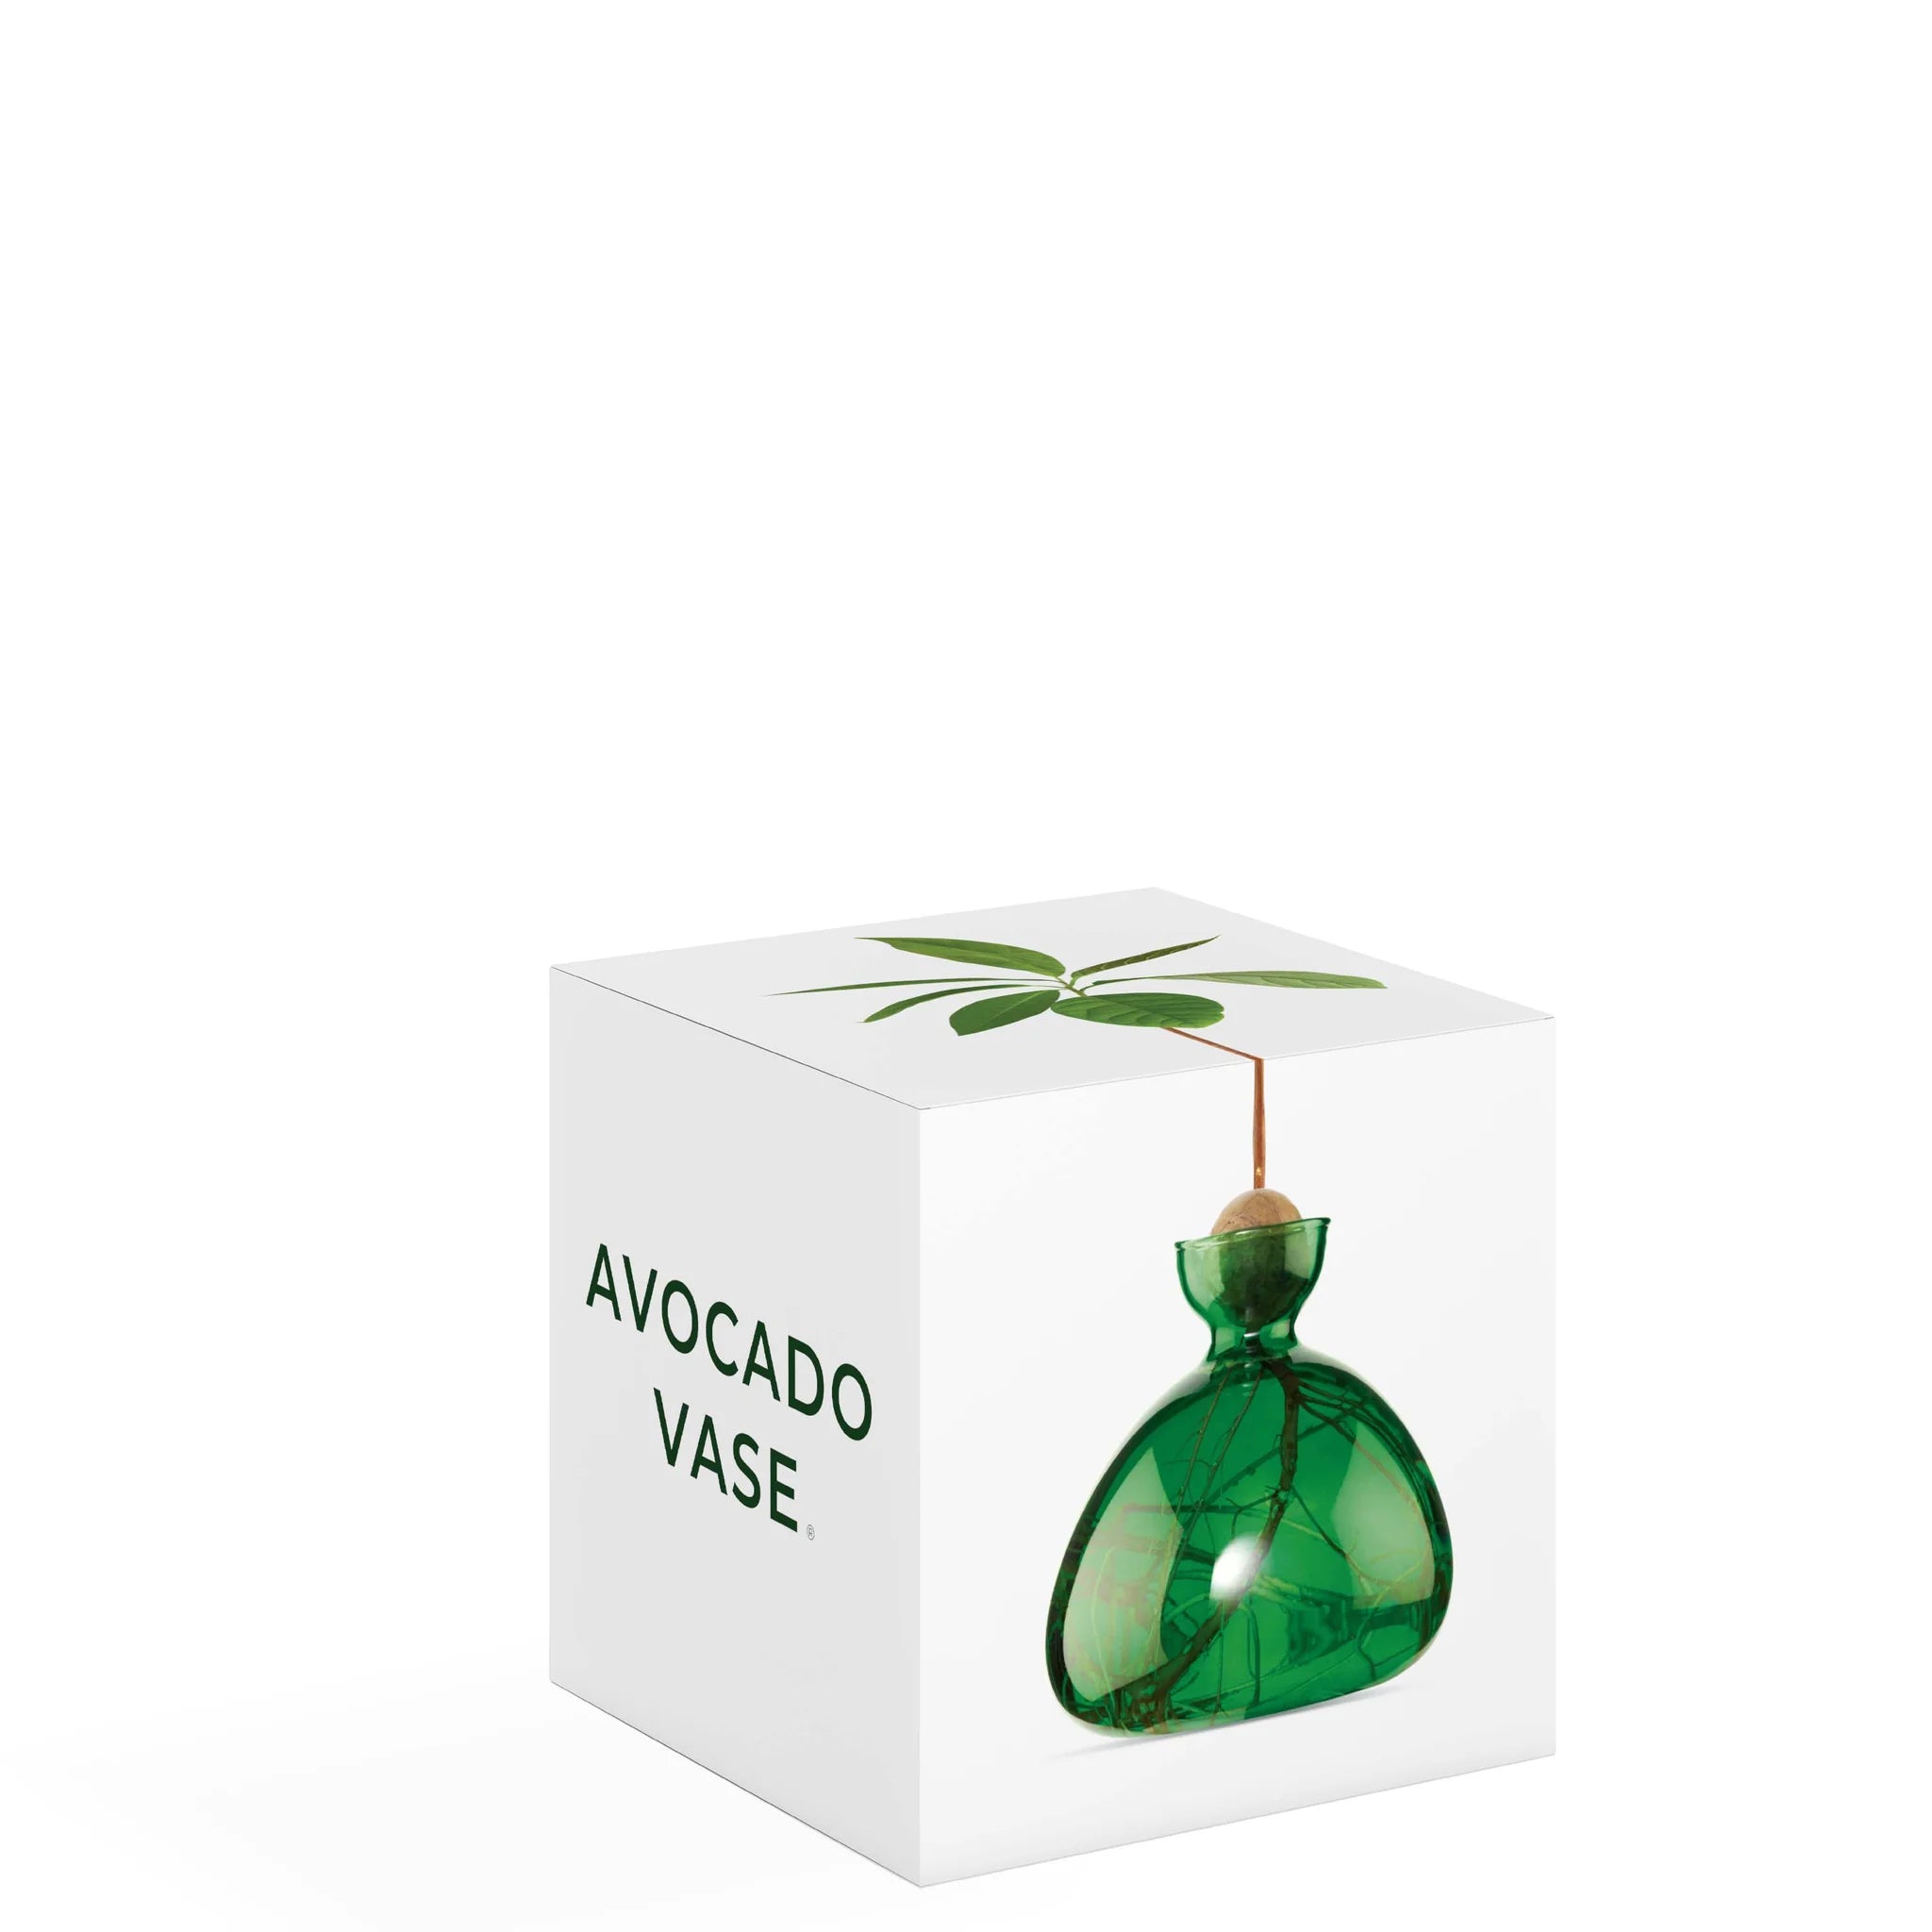 Avocado Vase in Emerald Green